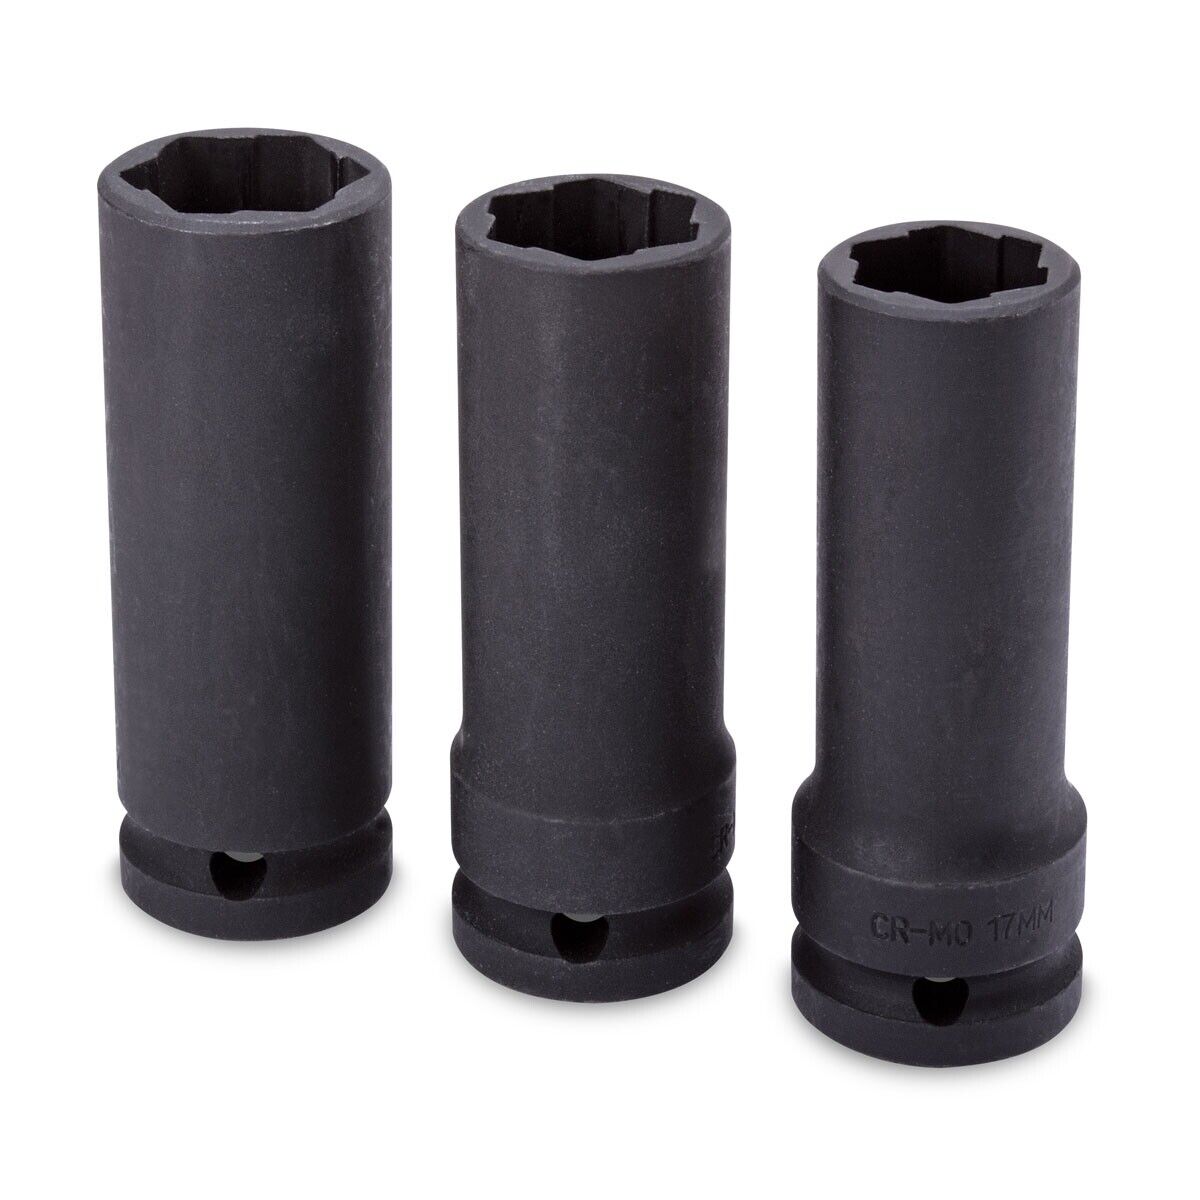 Eastwood Damaged Lug Nut Removal Tool Equipment Sockets Set Removes 17 19 & 21mm